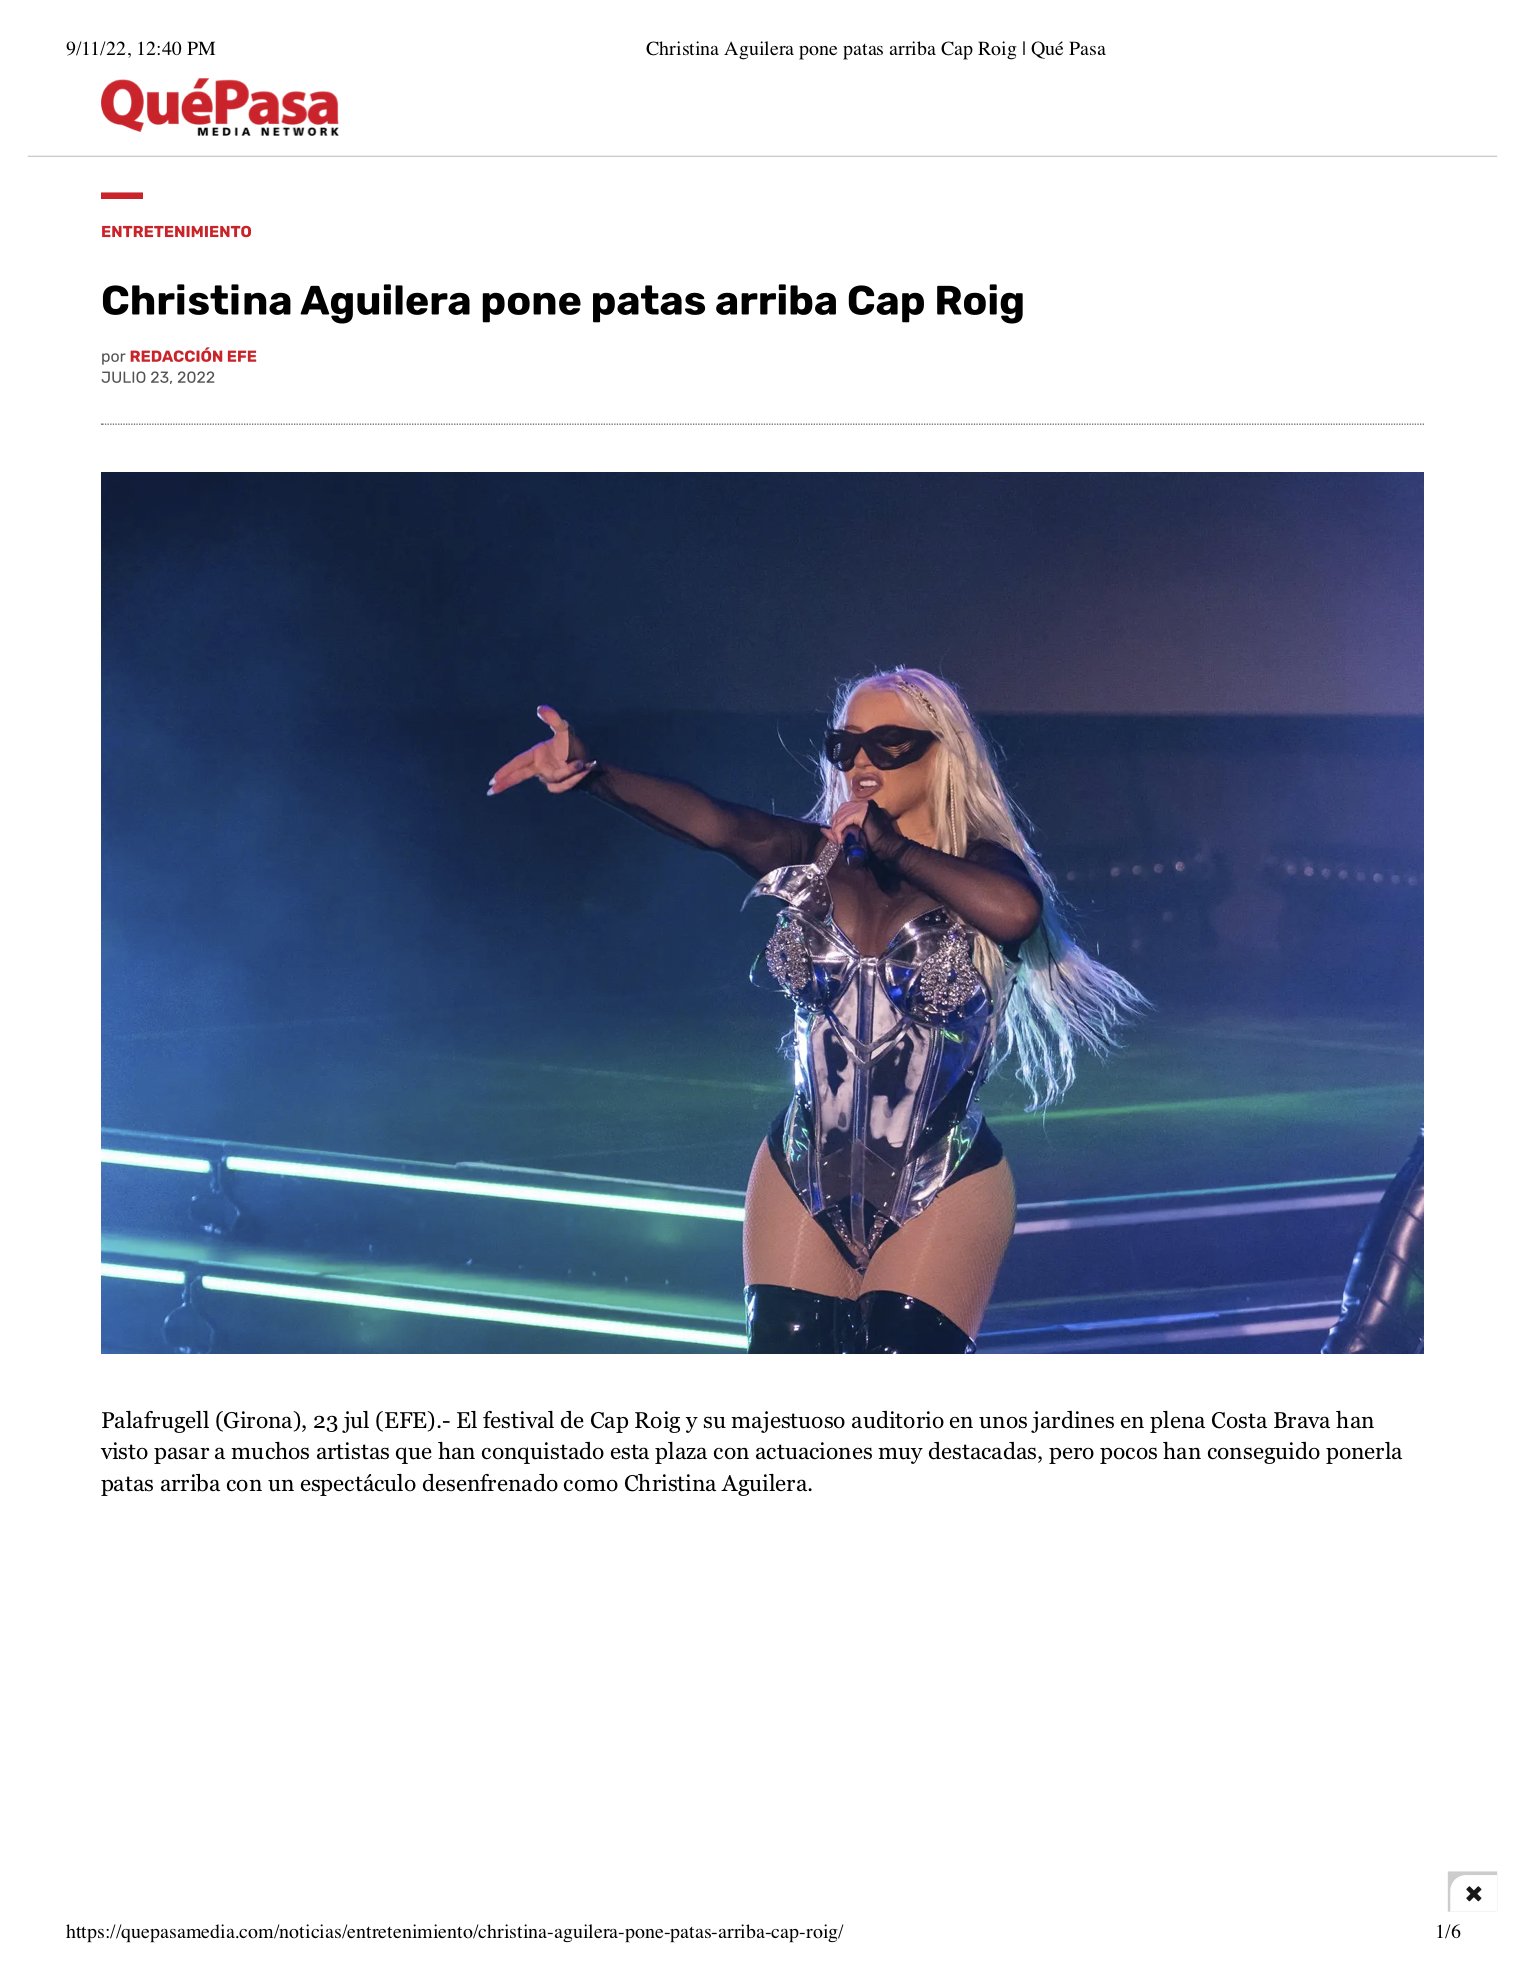 Christina Aguilera pone patas arriba Cap Roig _ Qué Pasa.jpg